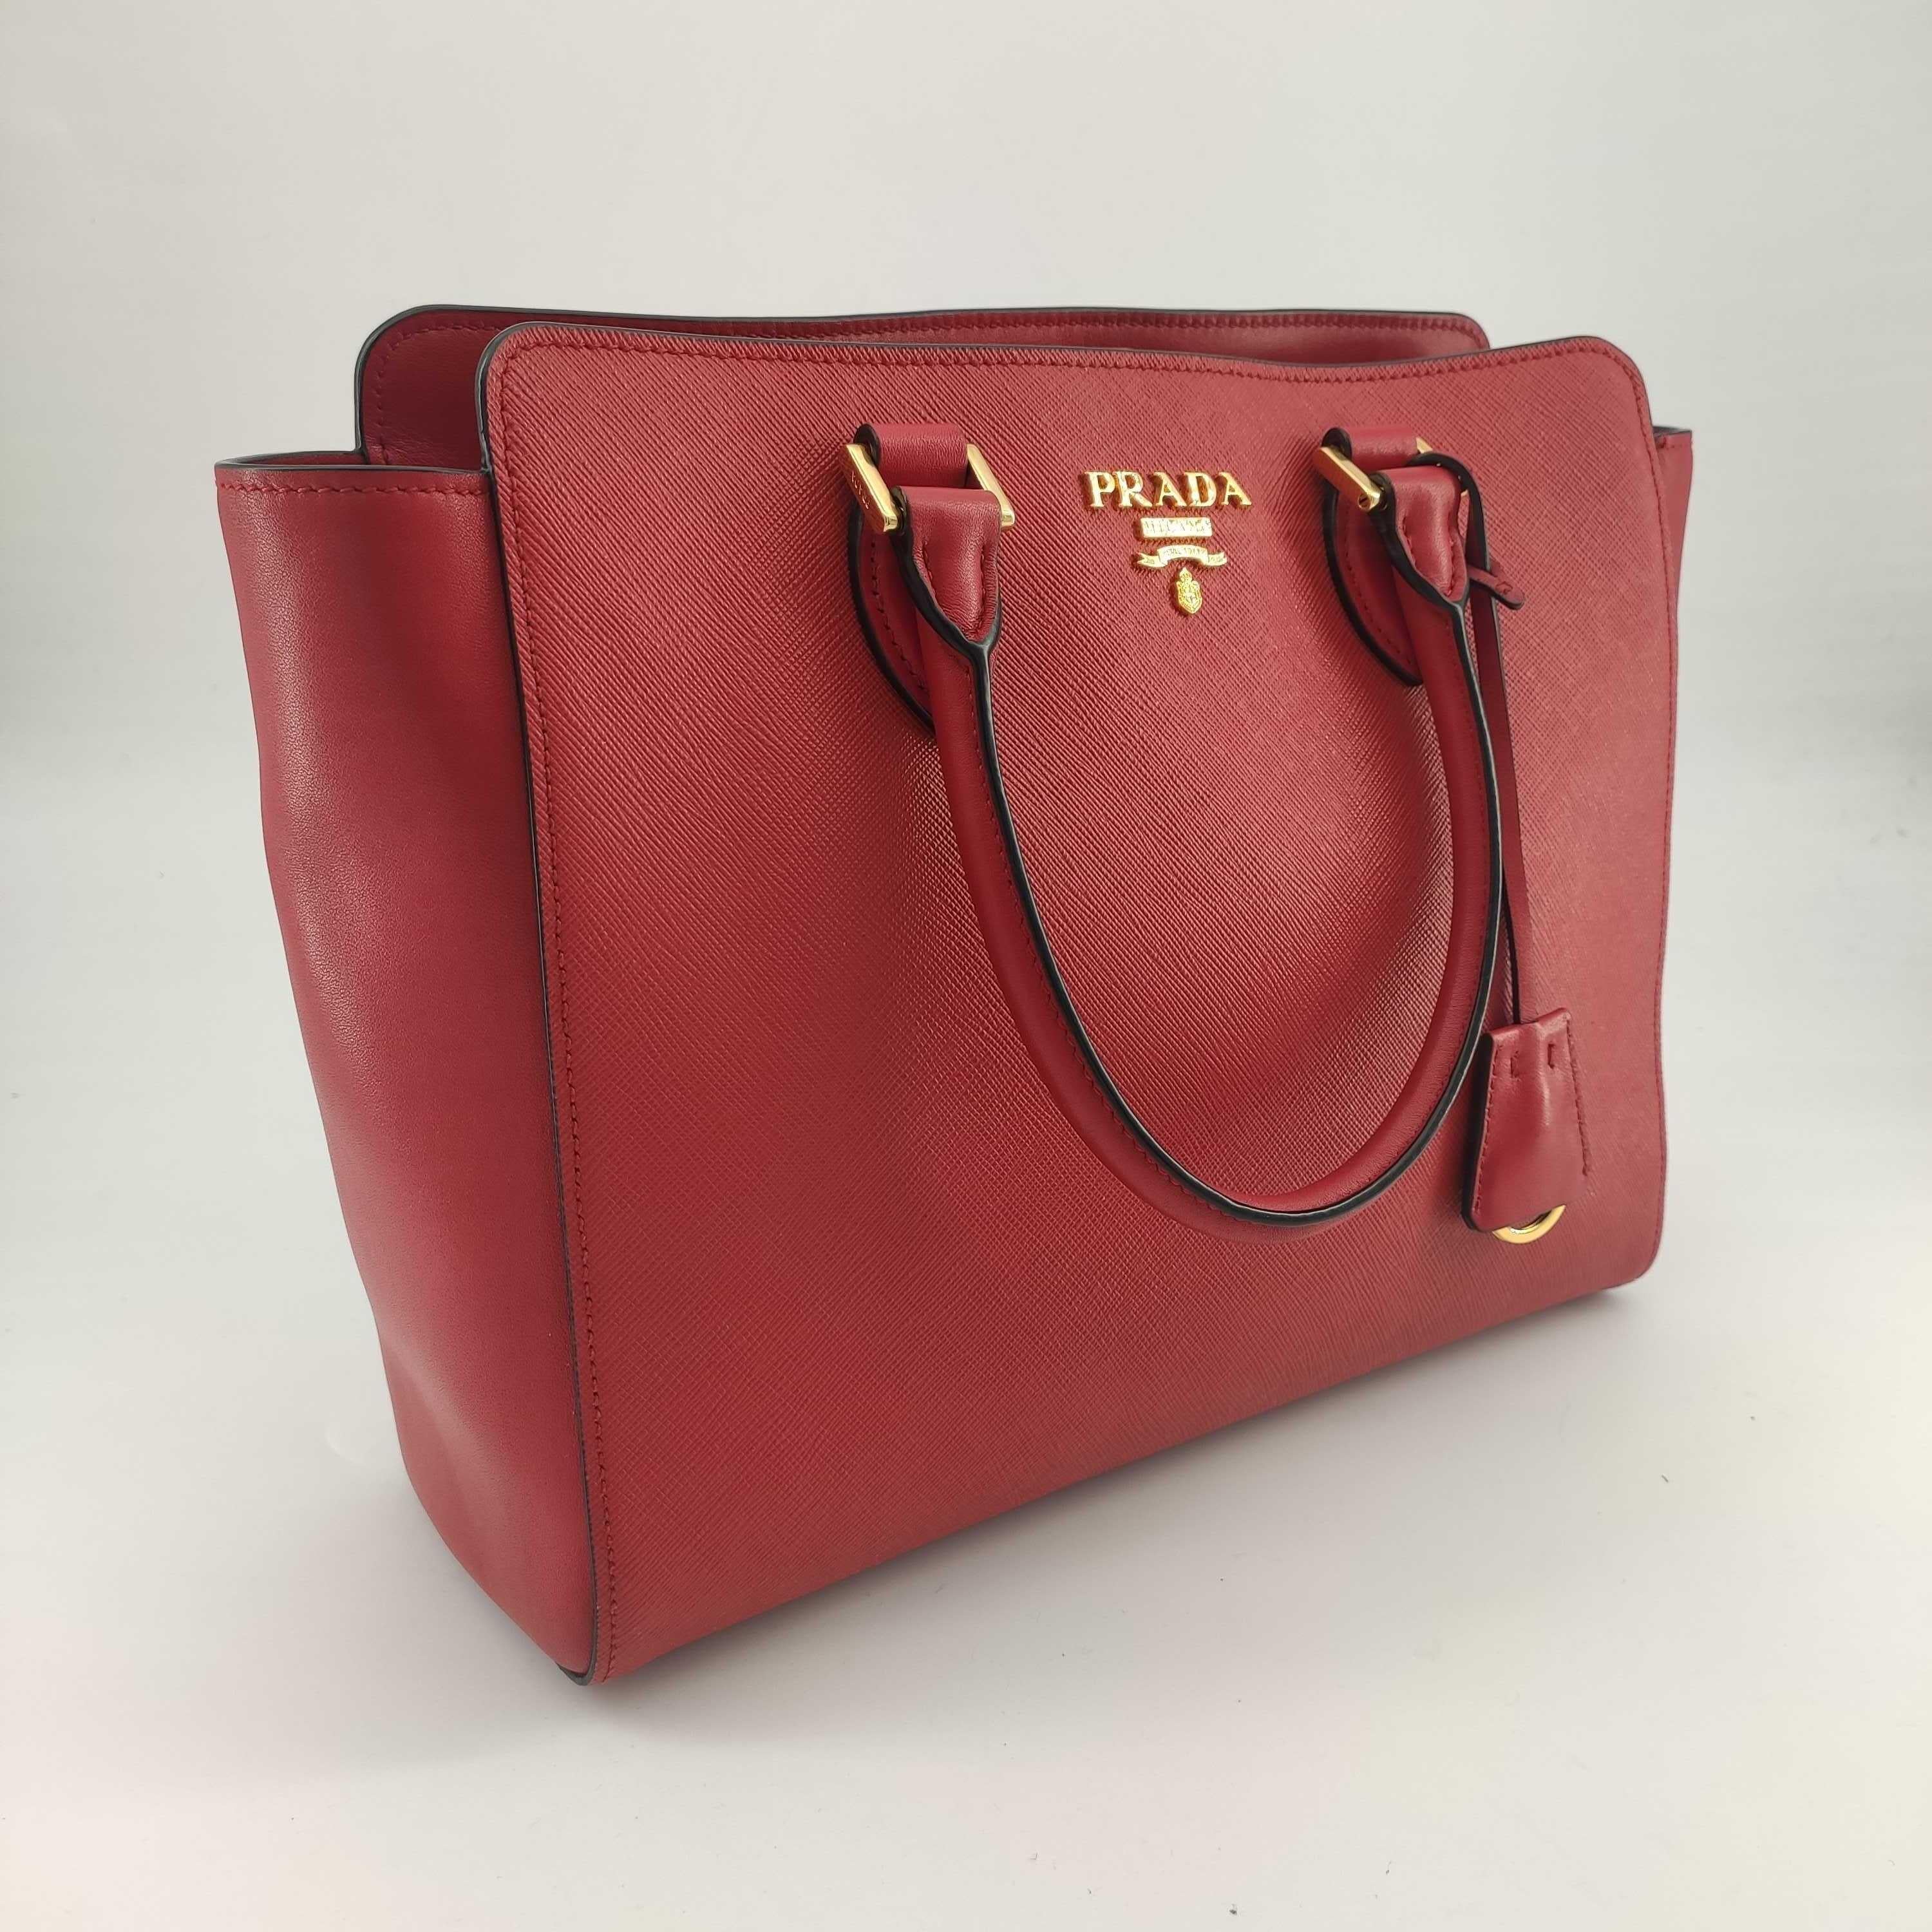 - Designer: PRADA
- Model: Saffiano
- Condition: Very good condition. 
- Accessories: Dustbag, Authenticity Card
- Measurements: Width: 29cm, Height: 24cm, Depth: 10cm
- Exterior Material: Leather
- Exterior Color: Red
- Interior Material: Cloth
-